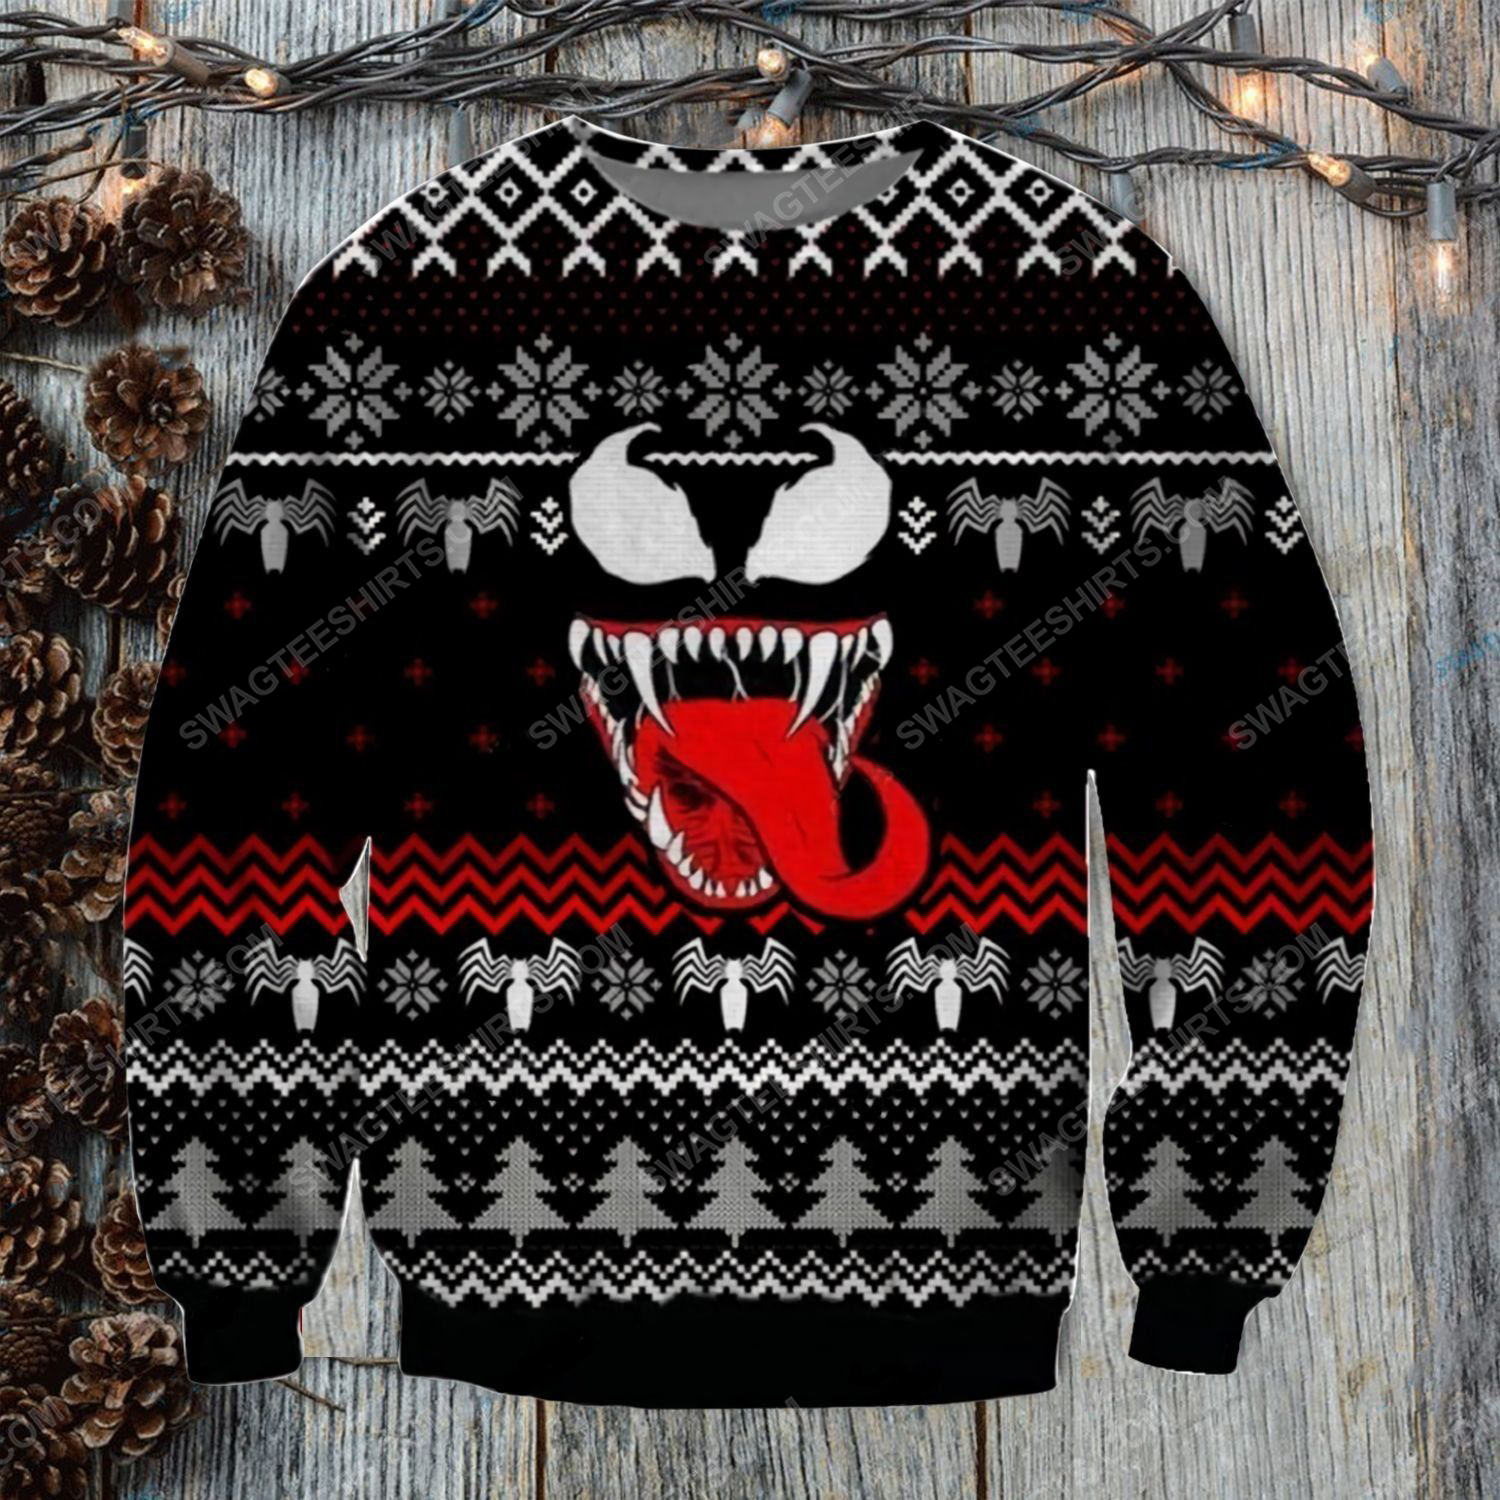 Spider man venom ugly christmas sweater - Copy